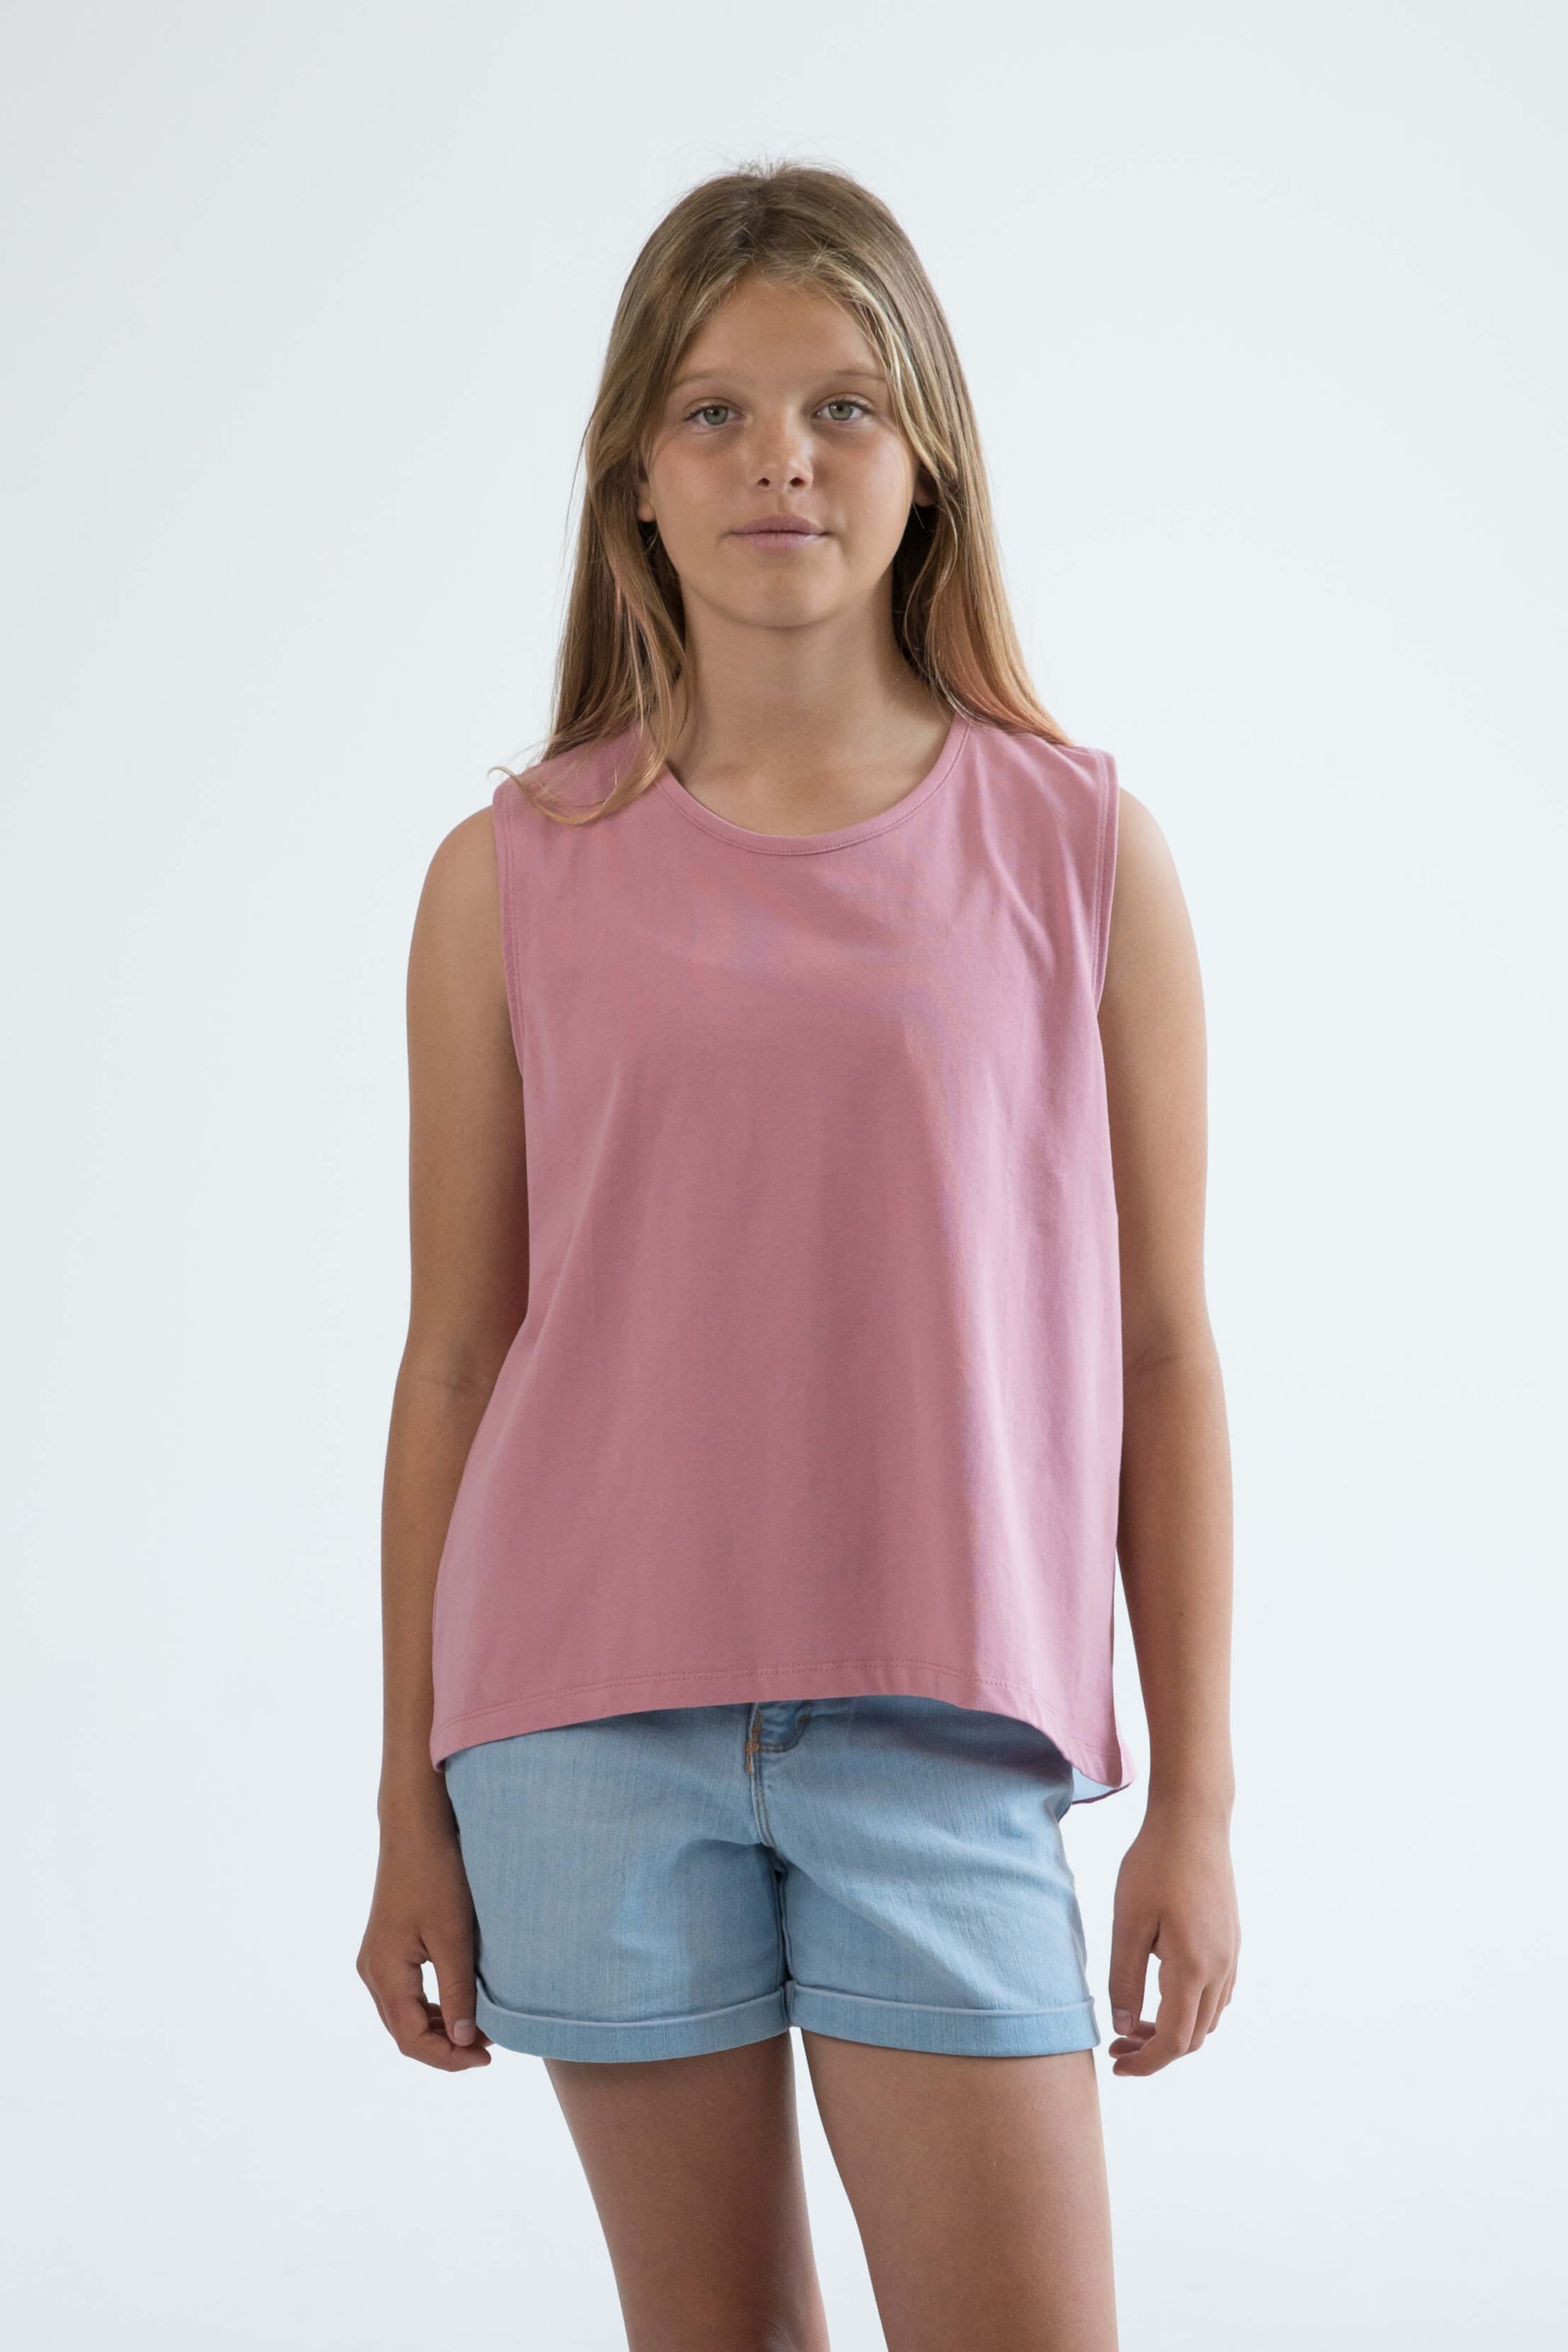 pink teen girls clothing sleeveless singlet top flamingo print by Love Haidee Australia racer back